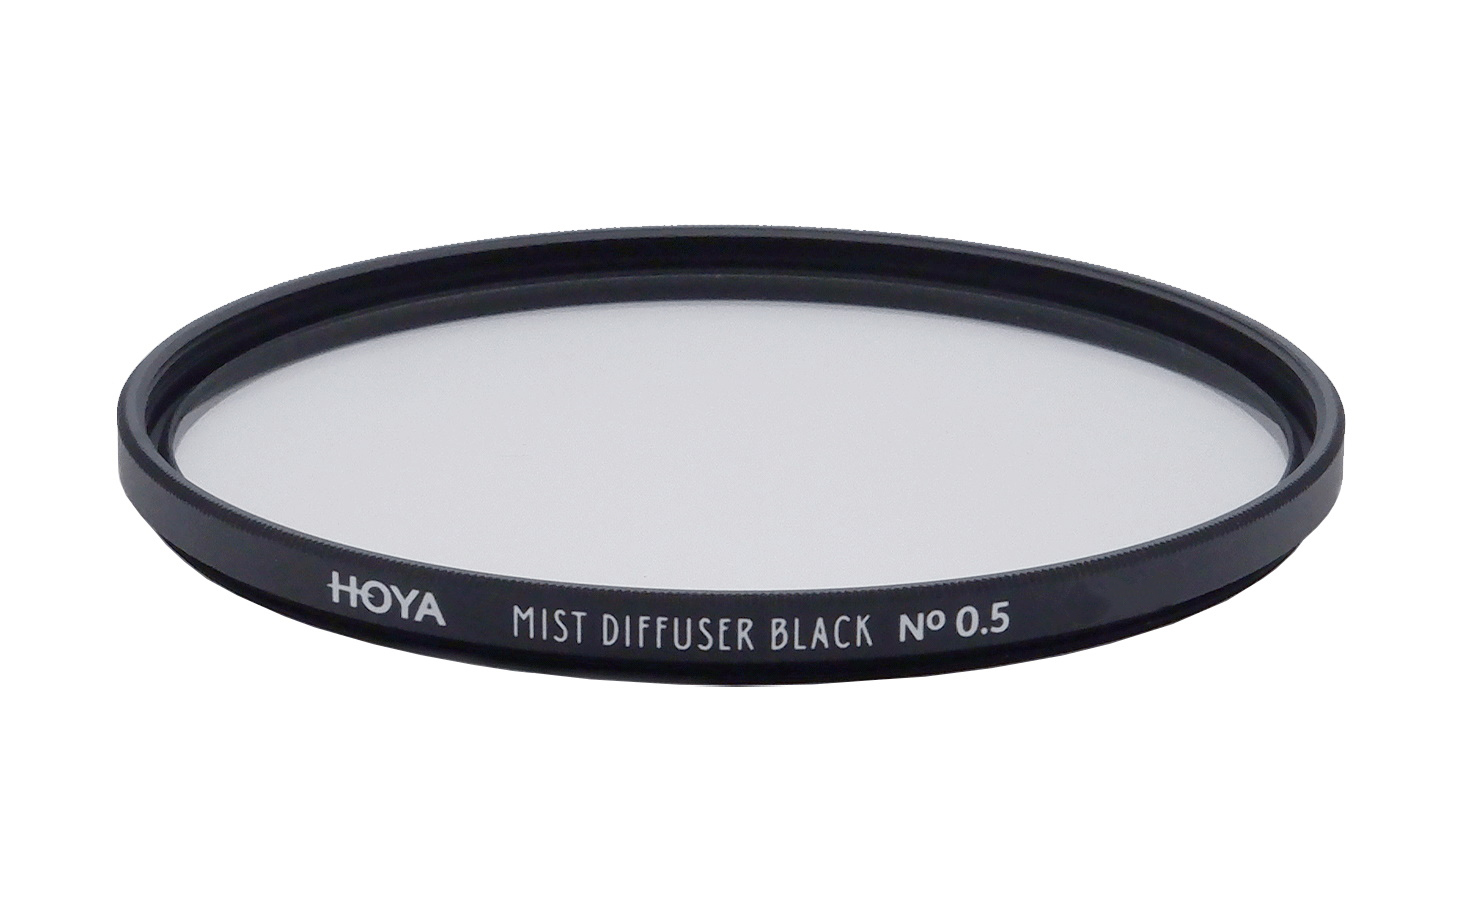 HOYA Mist Diffuser Black No0.5